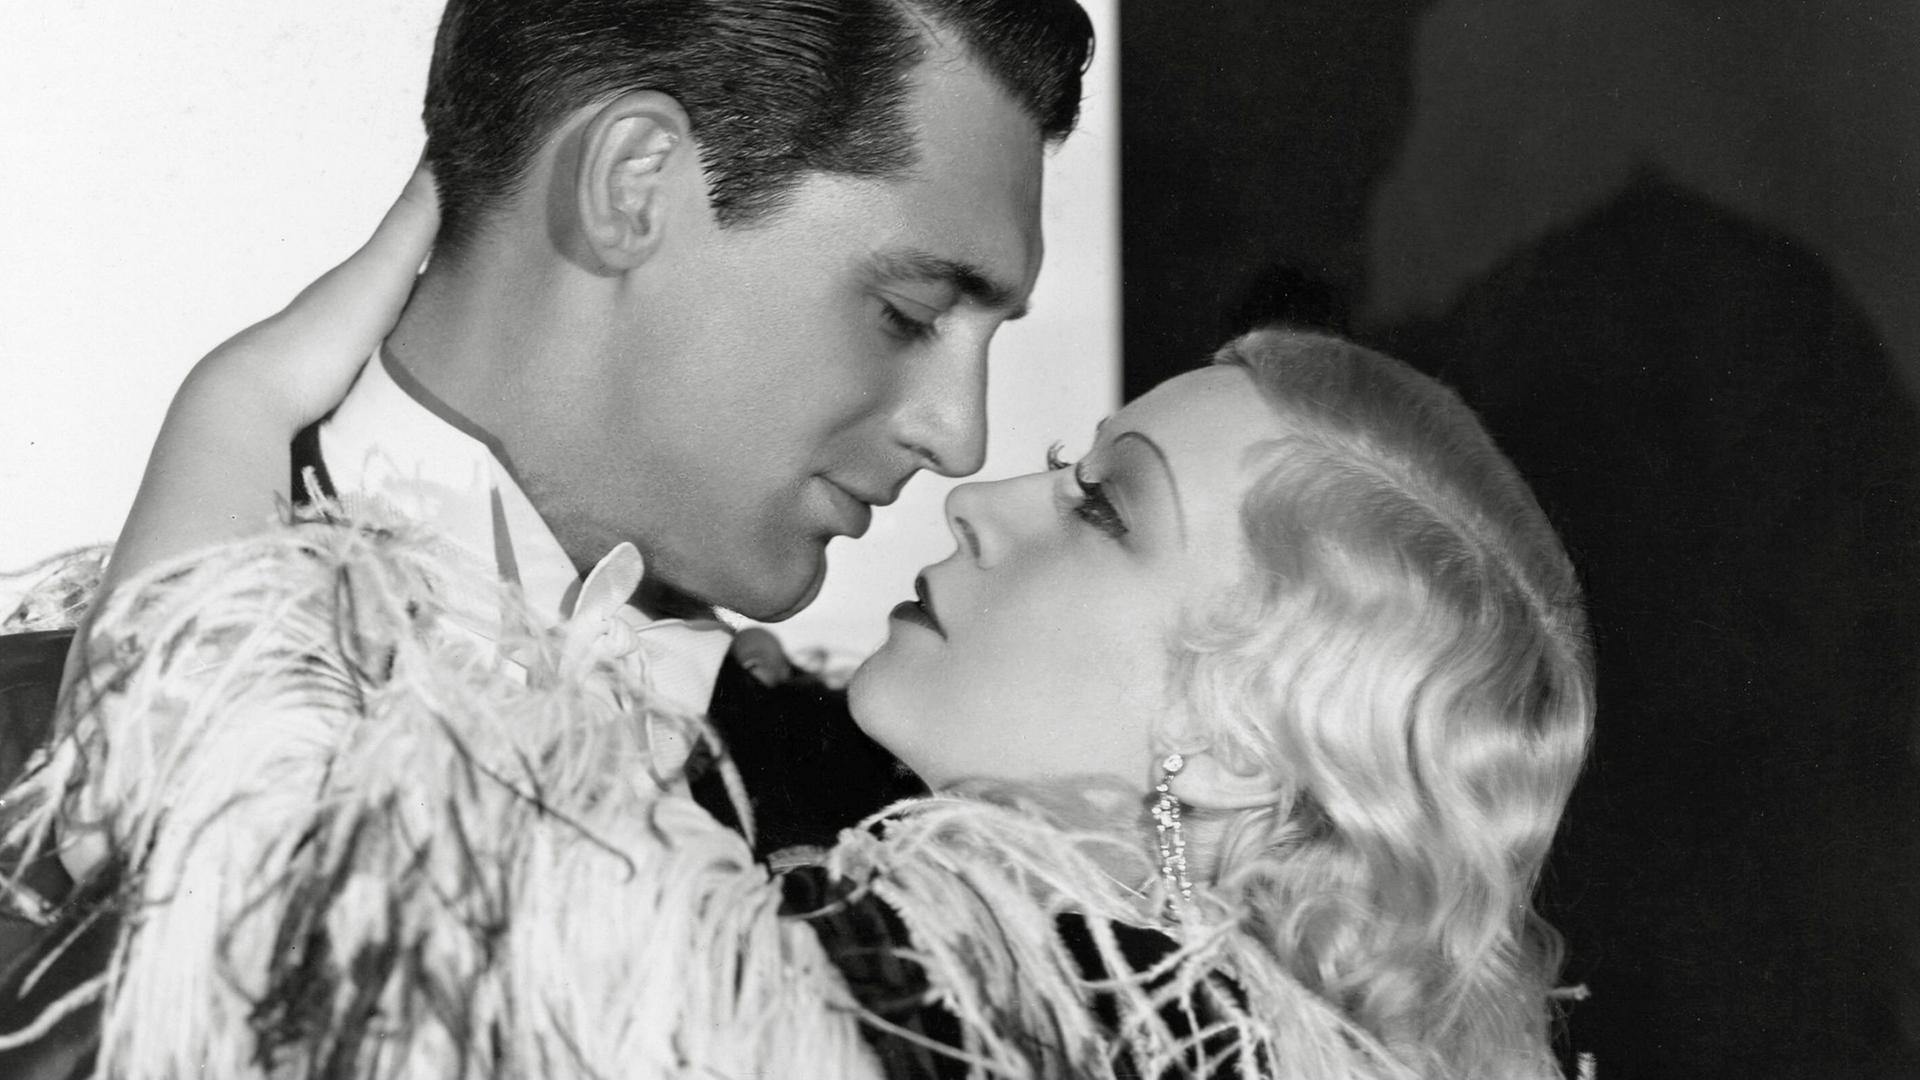 Cary Grant and Mae West in einer Kuss Szene im Film "I'm No Angel", 1933 Paramount, Hollywood.